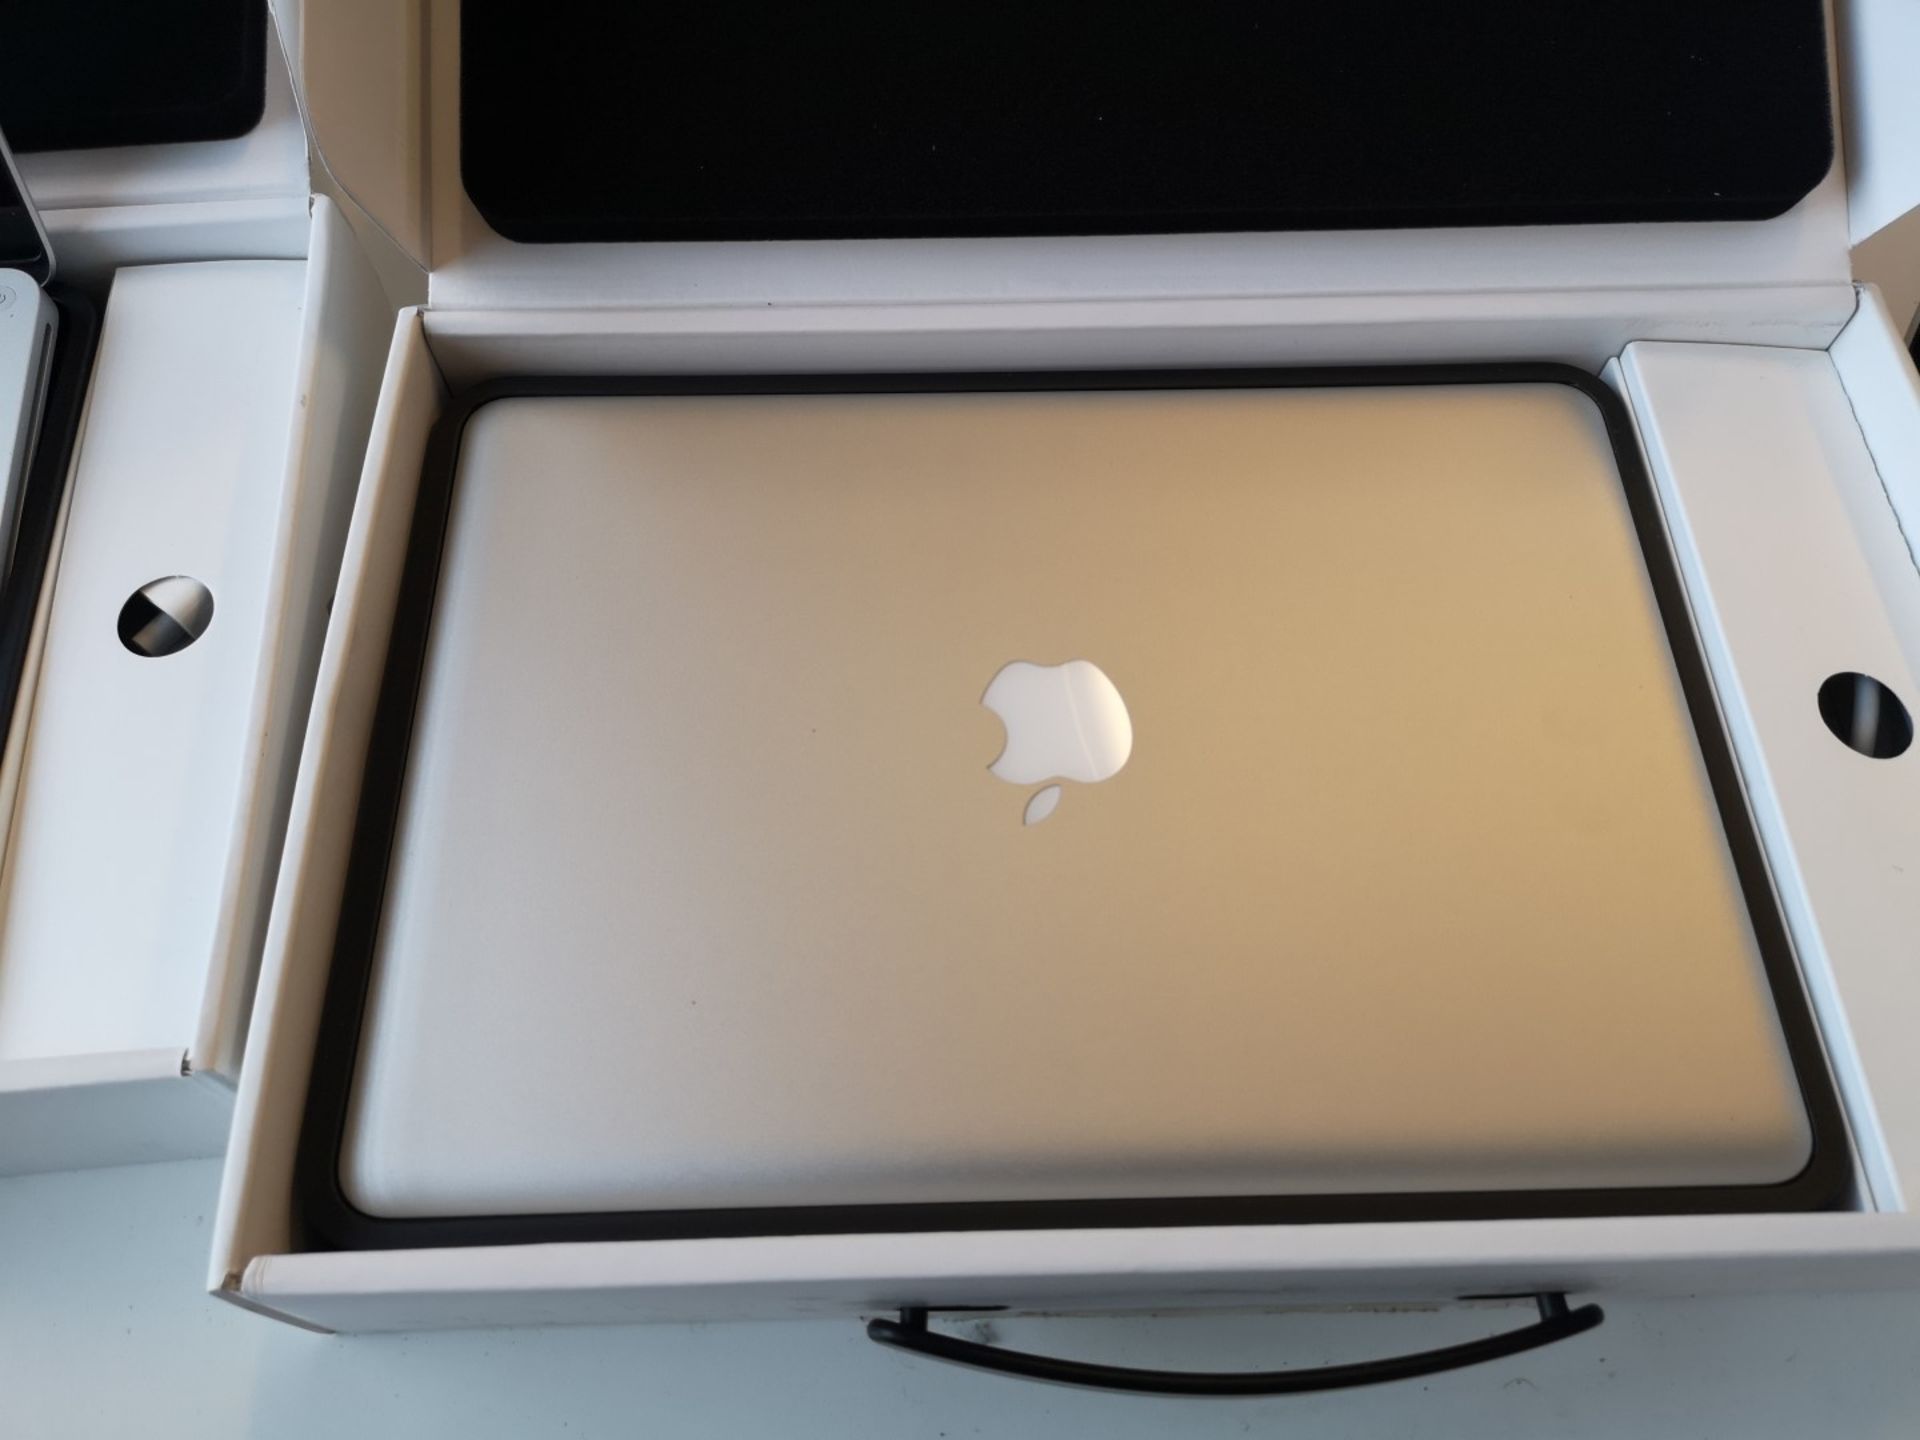 Apple MacBook Pro "Core i5" 2.5 13" Mid-2012 - Image 2 of 4